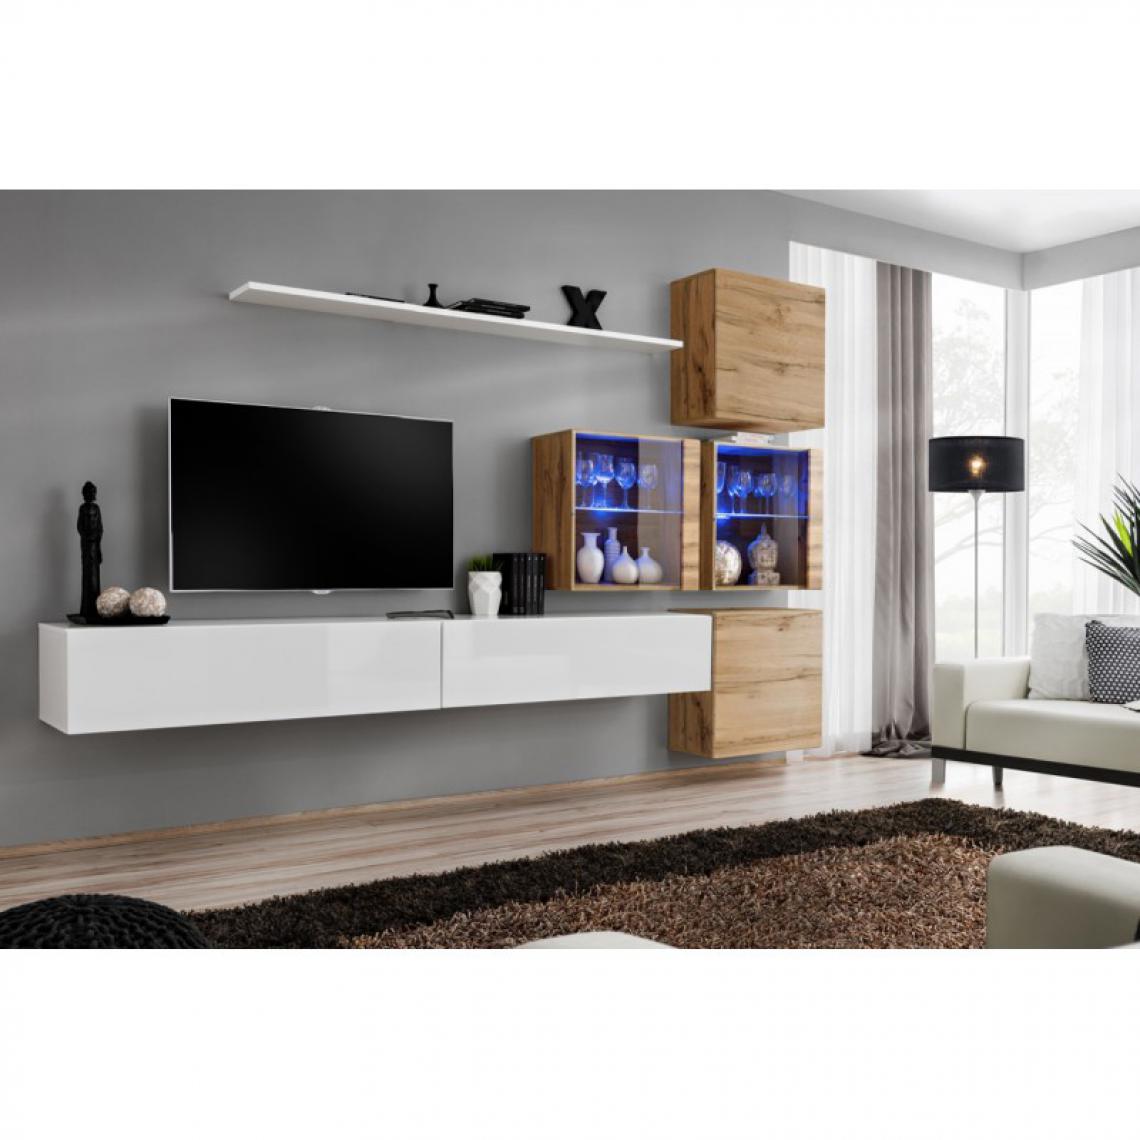 Ac-Deco - Meuble TV Mural Design Switch XIX 310cm Blanc & Naturel - Meubles TV, Hi-Fi